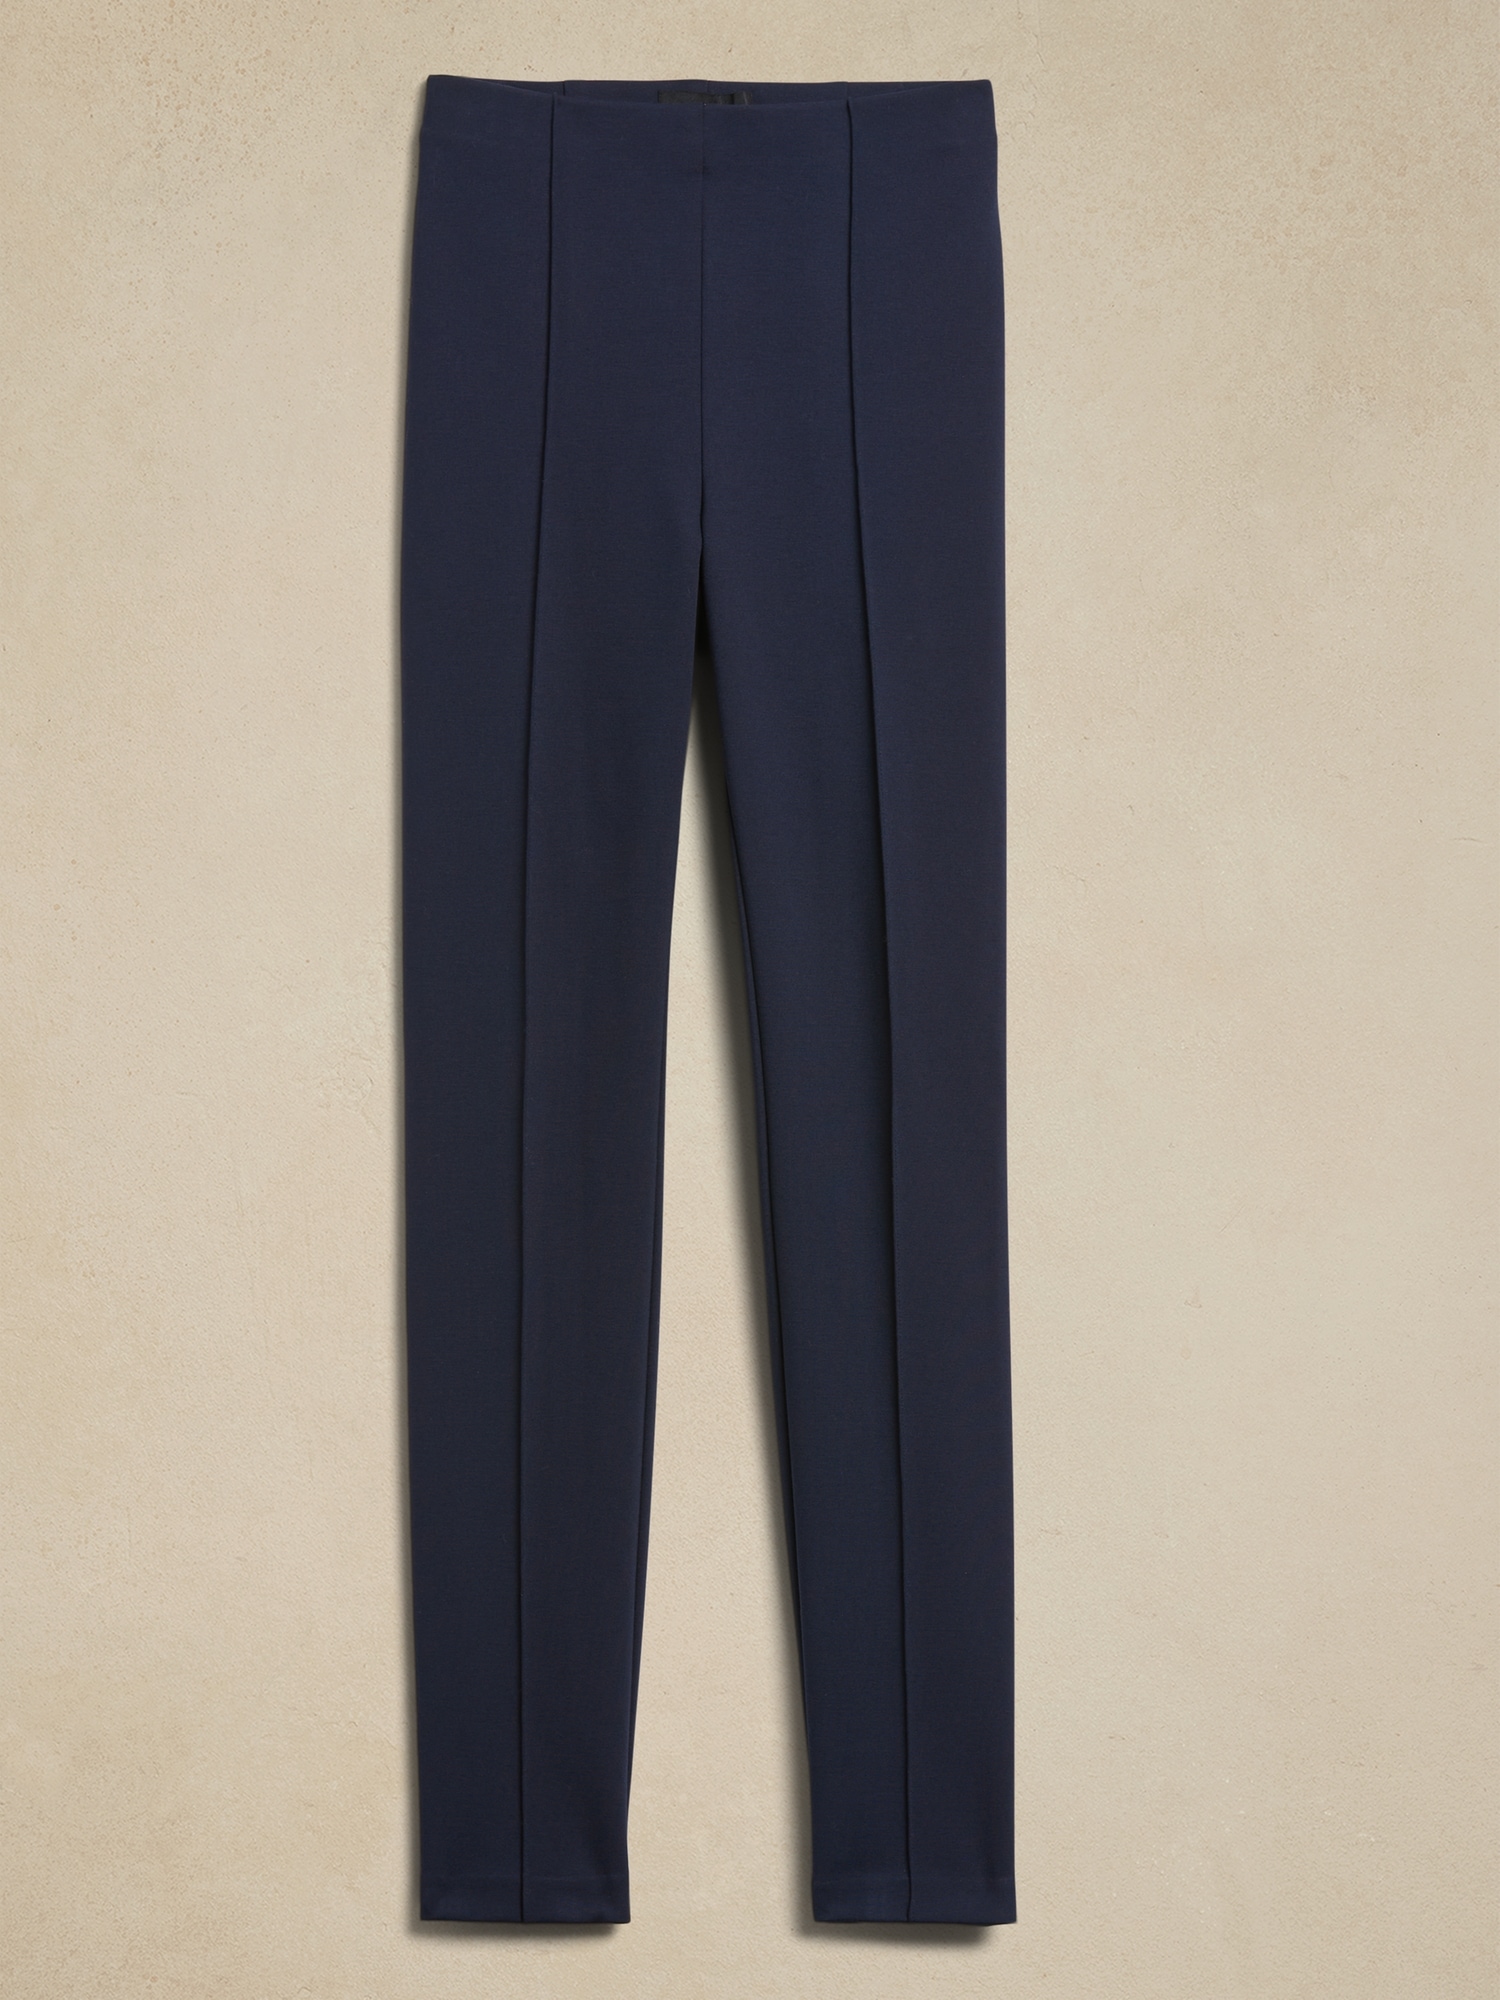 NECHOLOGY Capris Women's Petite Slim Comfort Fit Ponte Dress Pants Grey  4X-Large